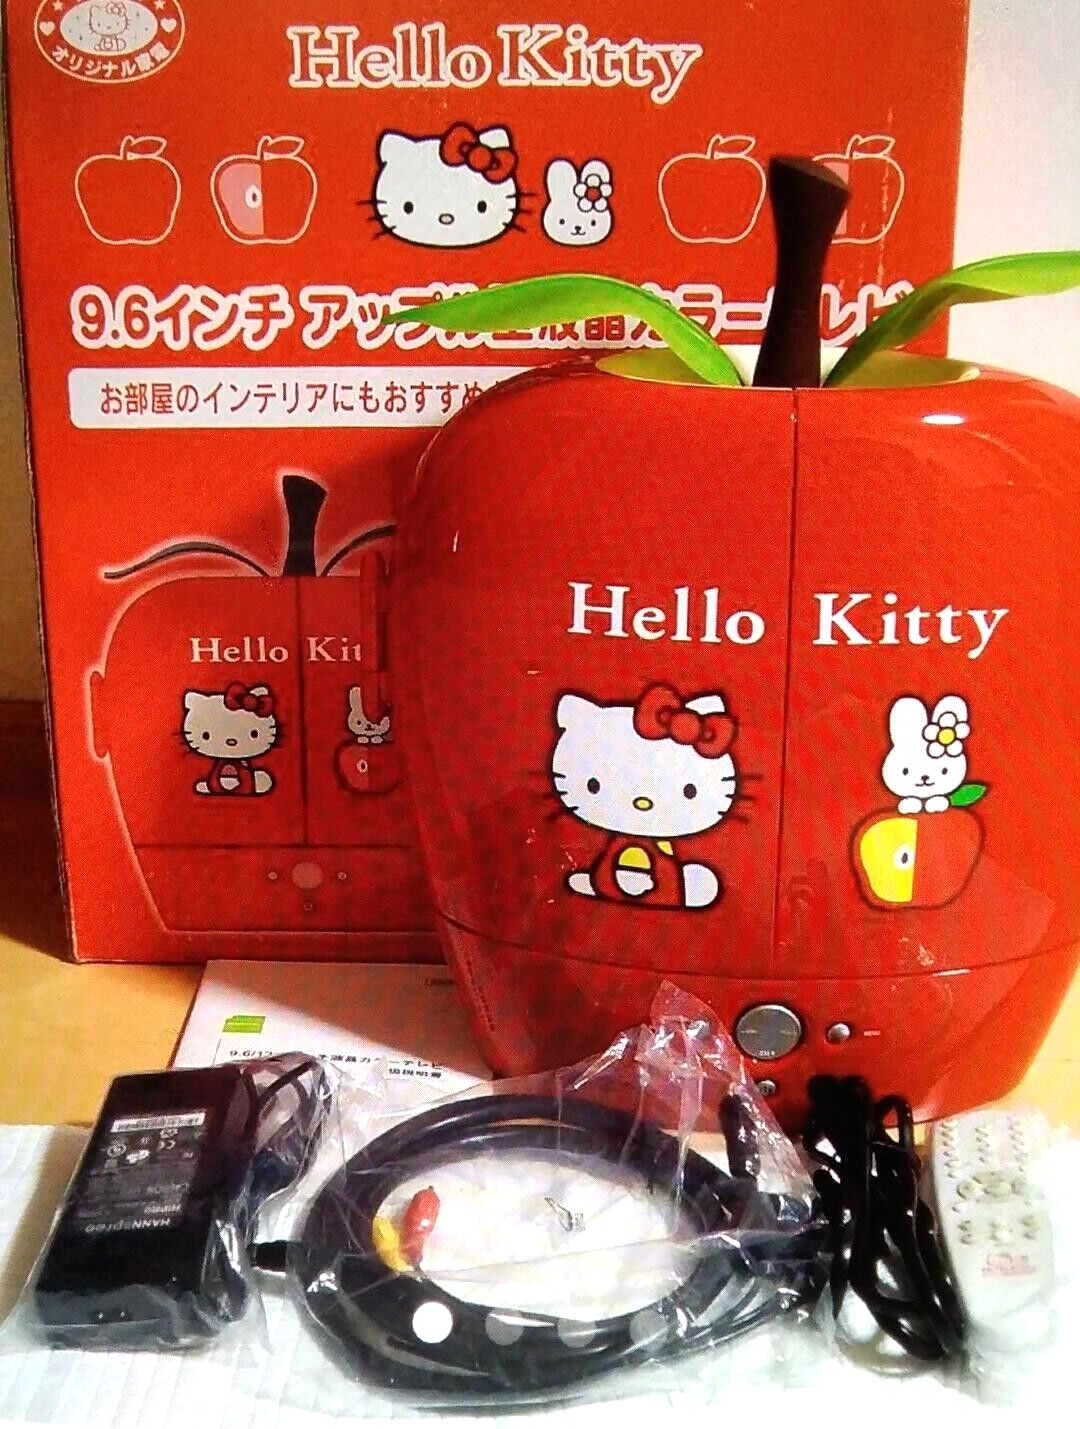 Sanrio Hello Kitty Apple TV 9.6 inch LCD Liquid Crystal Television Rare Unused